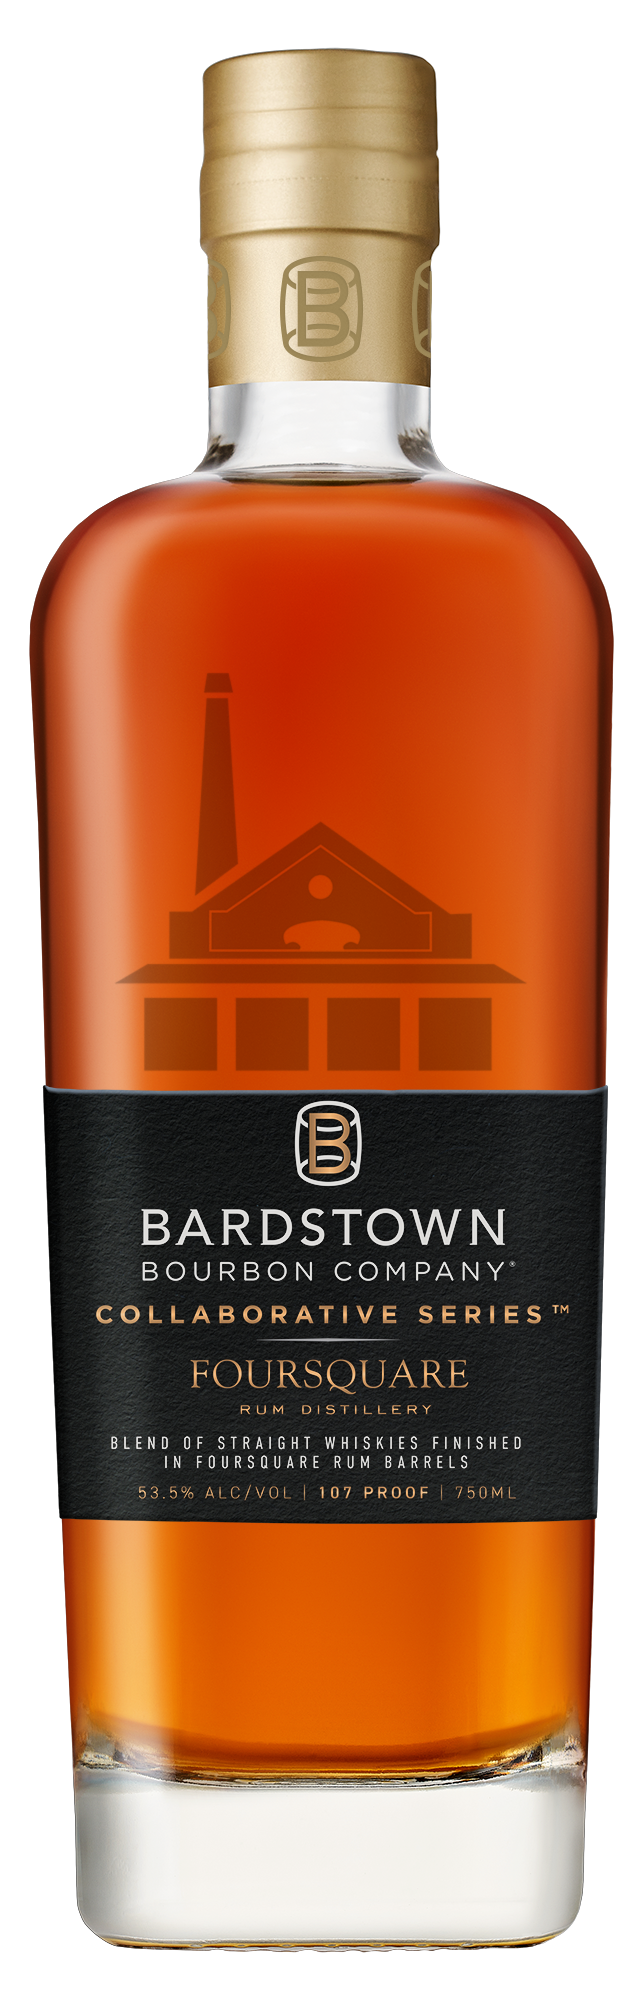 Bardstown Foursquare Rum Distillery aged Bourbon 750ML R